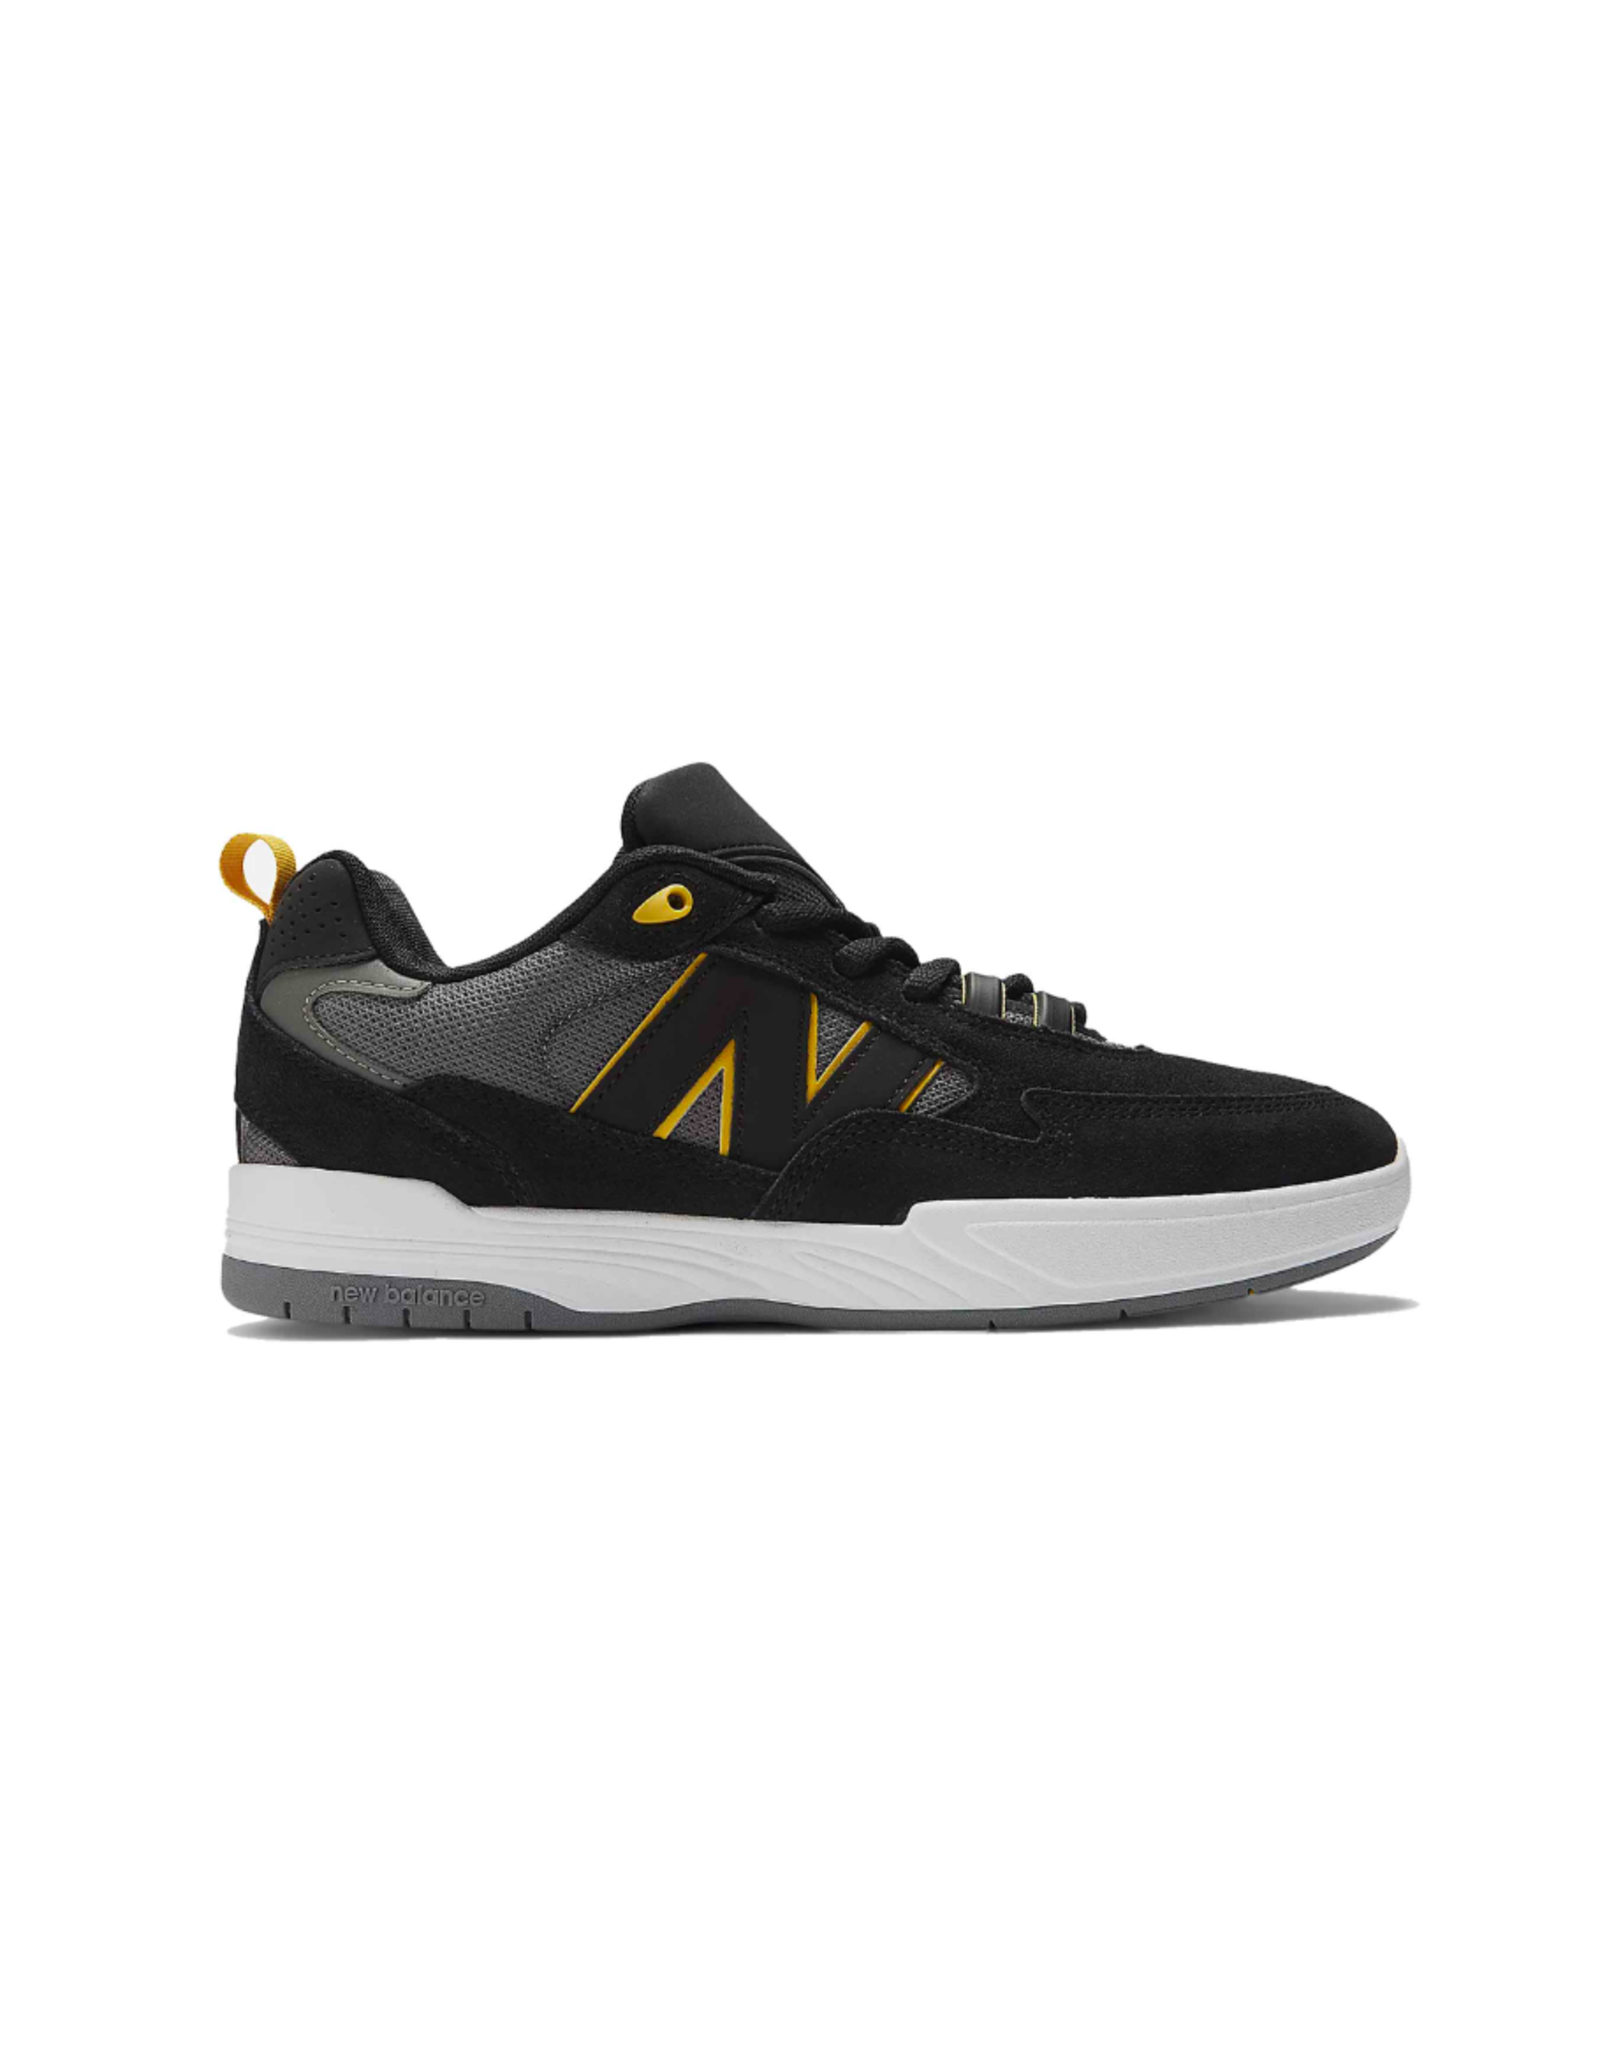 New Balance Men's Numeric Tiago Lemos 808 Shoes Black/Yellow